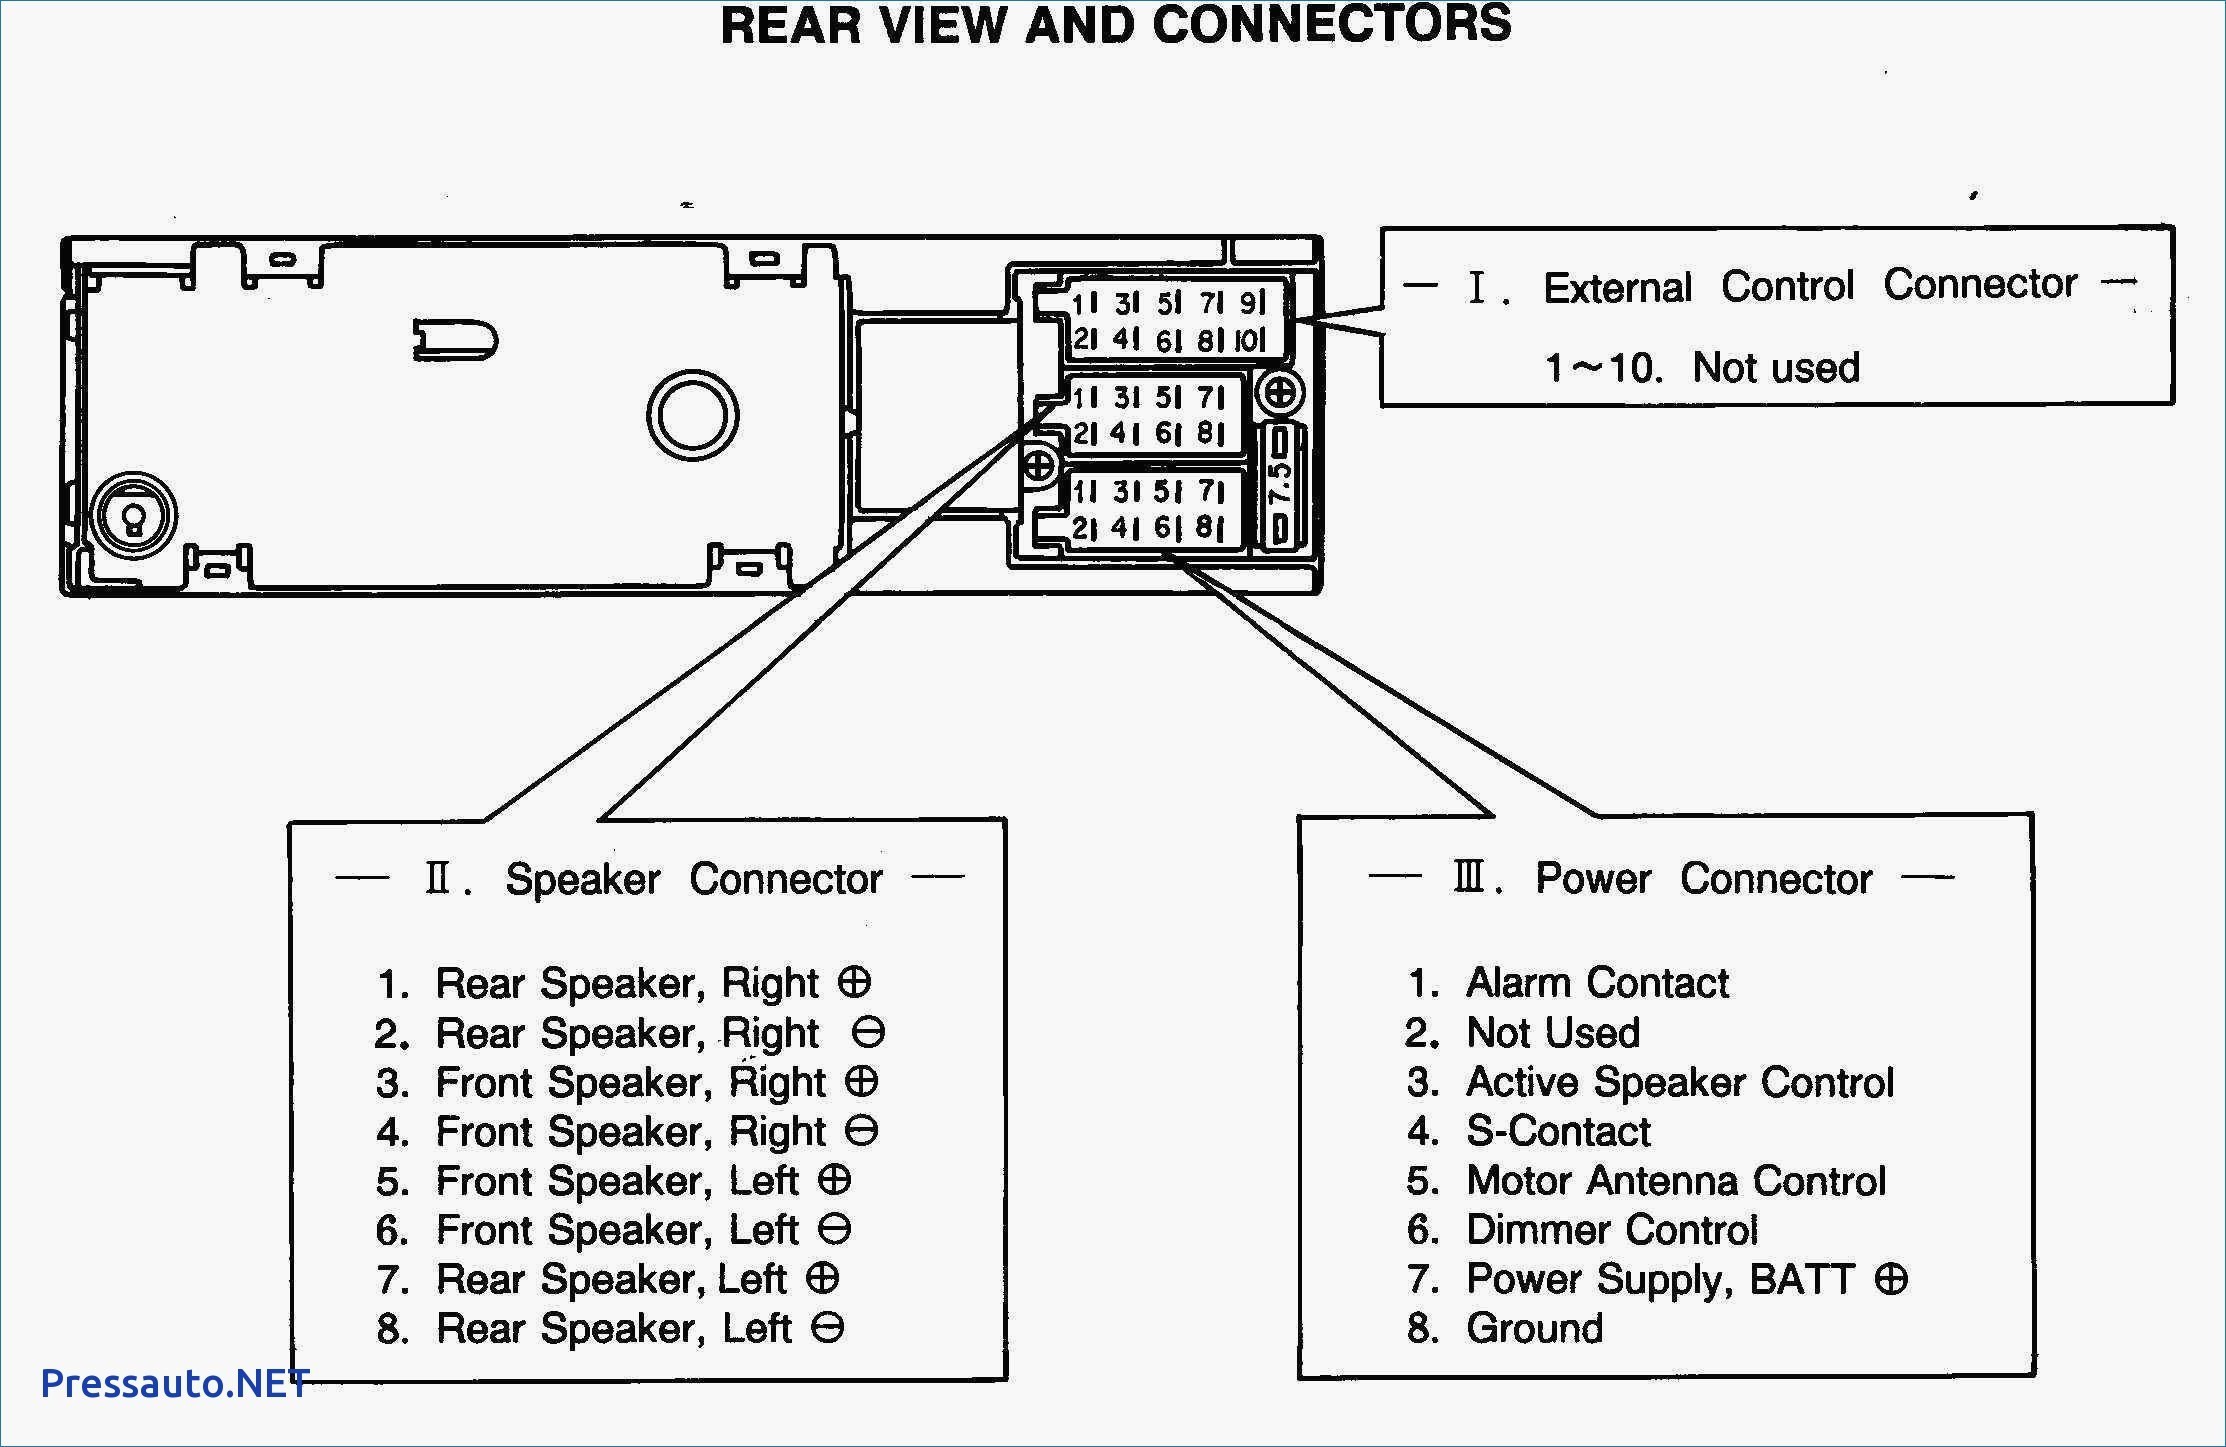 Car Radio Wiring Diagrams Bose Car Stereo Systems Wiring Diagram Experts Wiring Diagram • Of Car Radio Wiring Diagrams